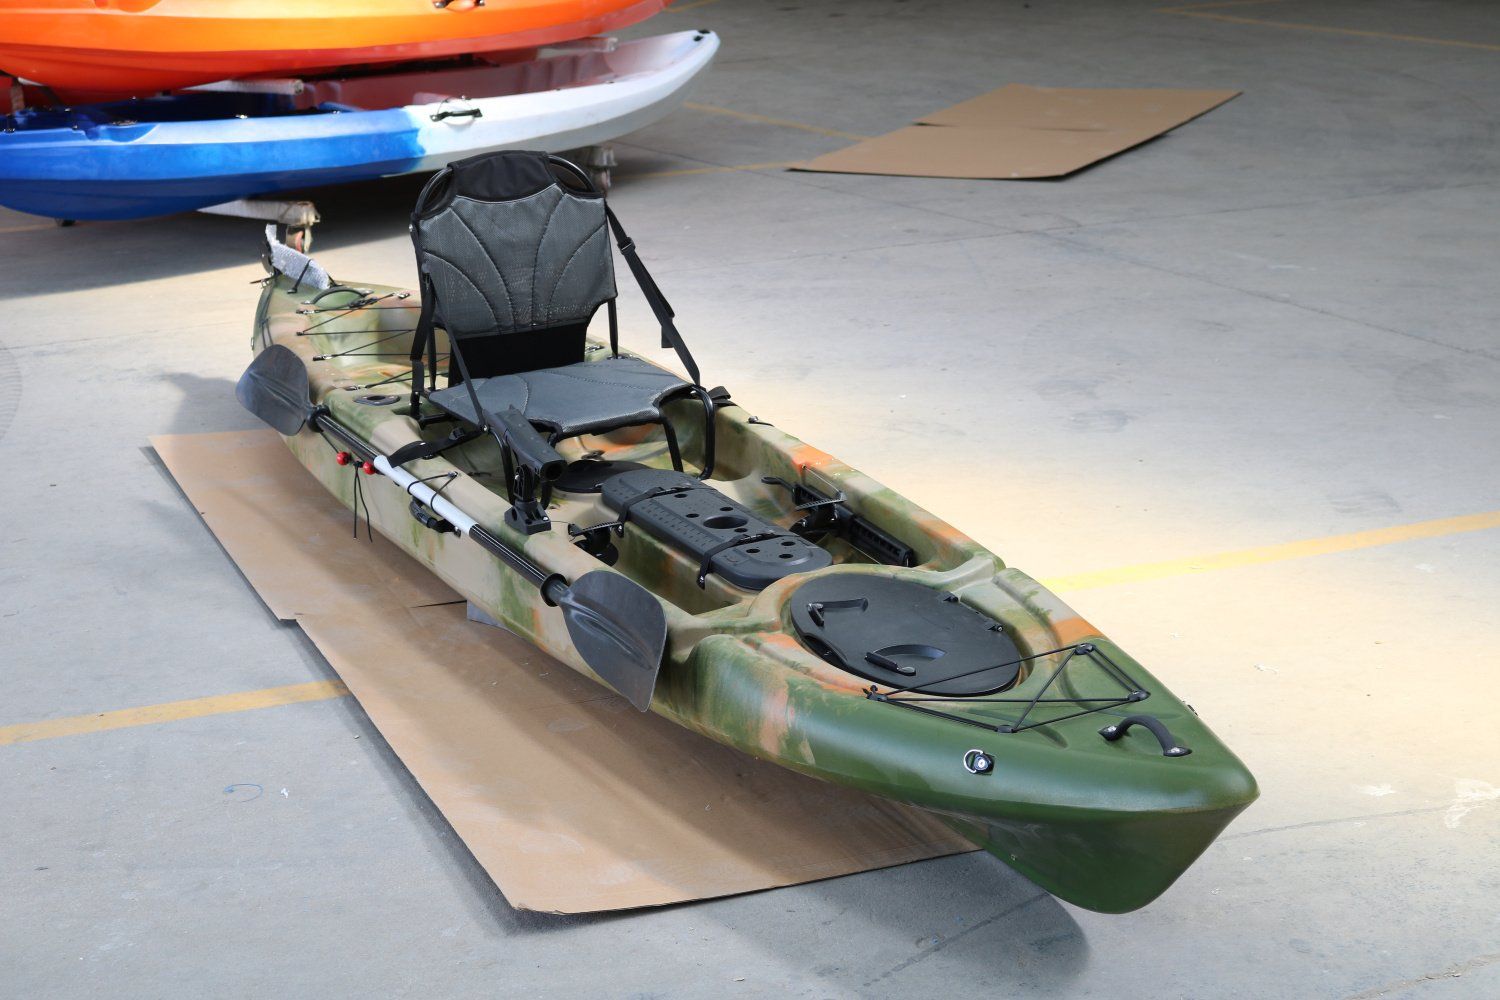 The SkipJak FishJak 14 - Deluxe 14.1 foot Fishing Kayak Lake Land Kayaks Jungle Camo 